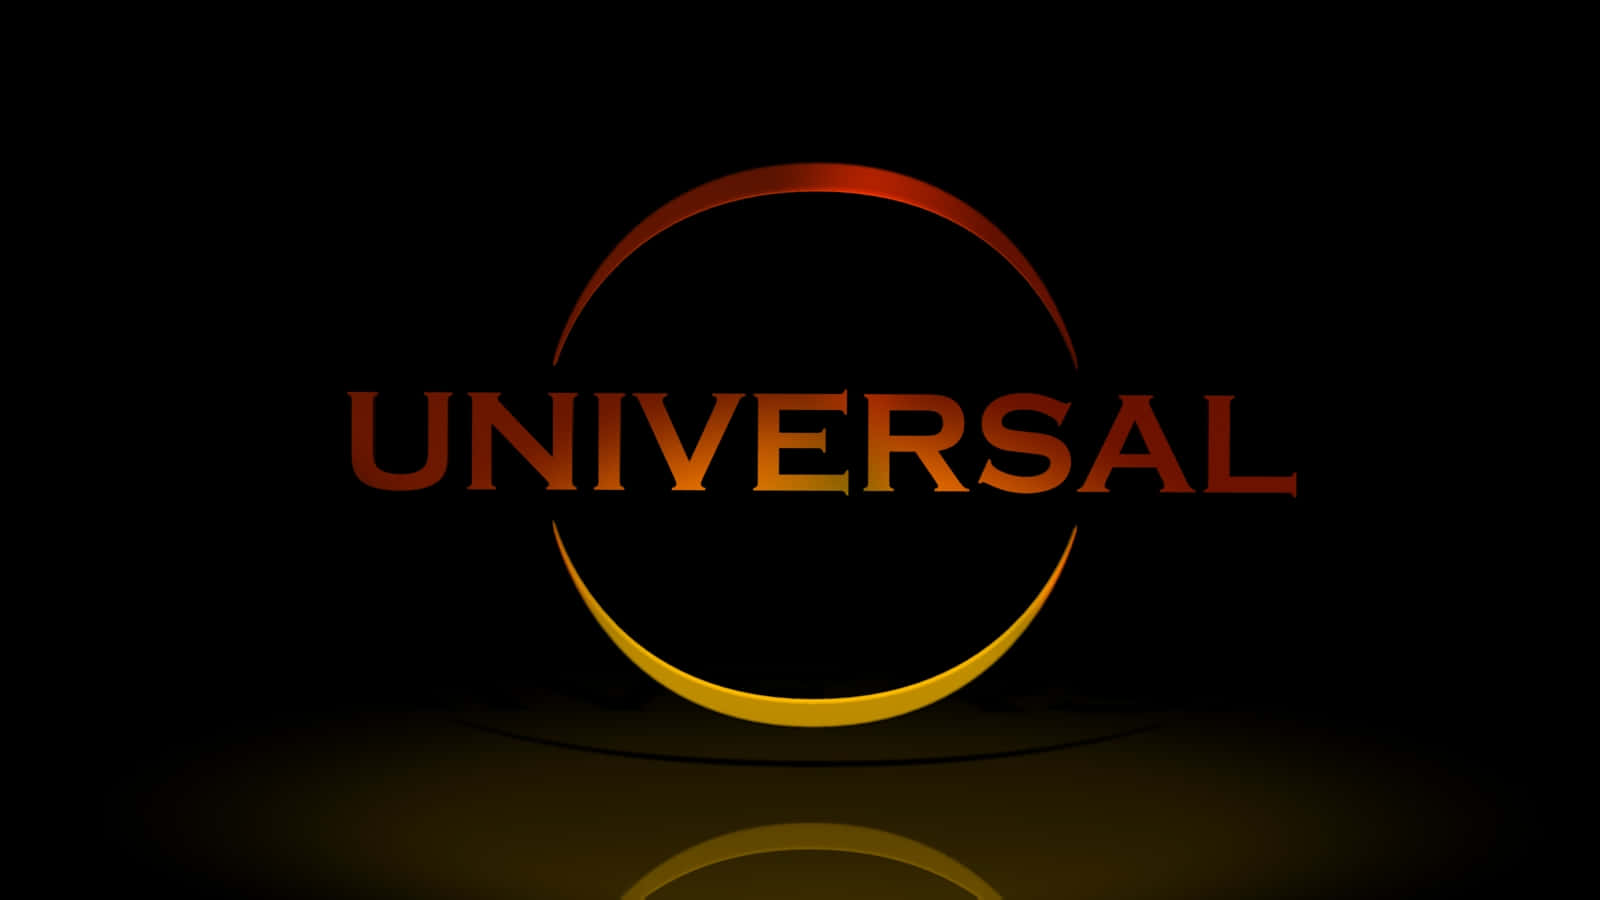 Universal Logo On A Black Background